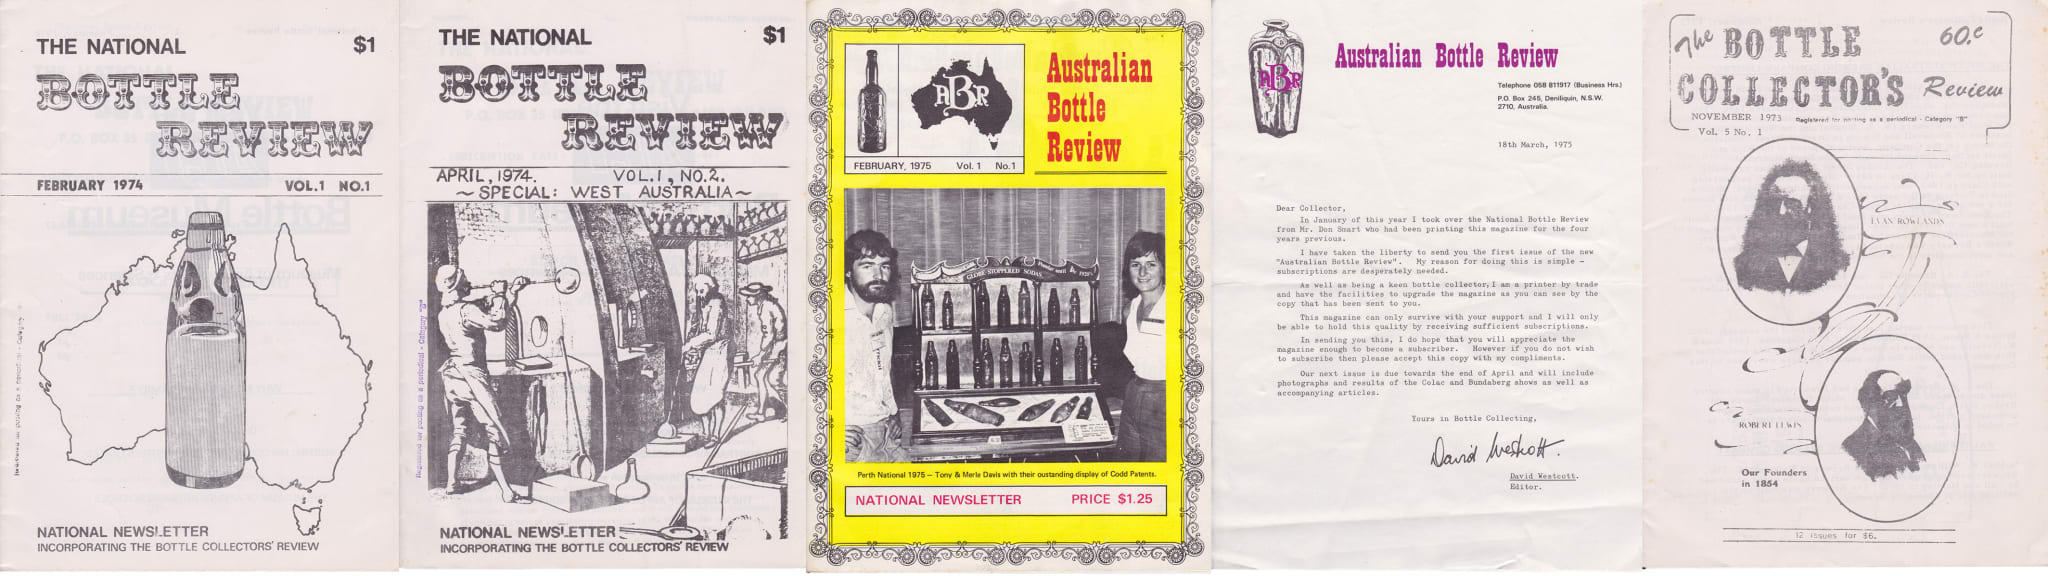 Australian Bottle Review Magazines